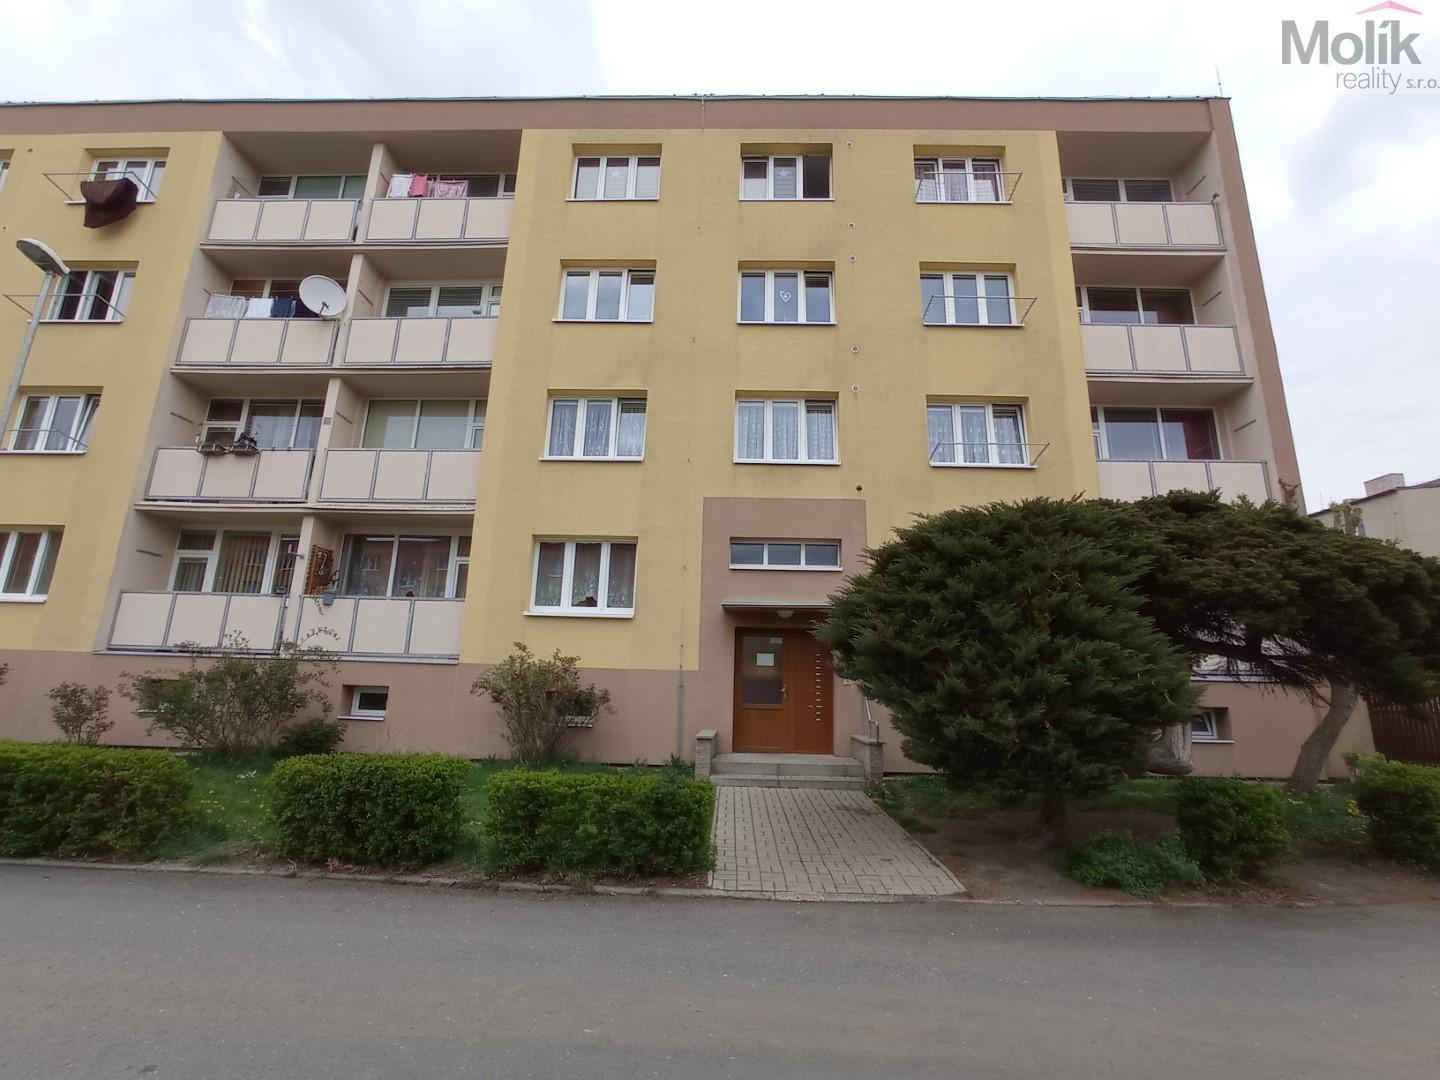 Prodej bytu 2 + 1 s lodžií, ul. Zahradnictví, Duchcov, okres Teplice, 51 m2